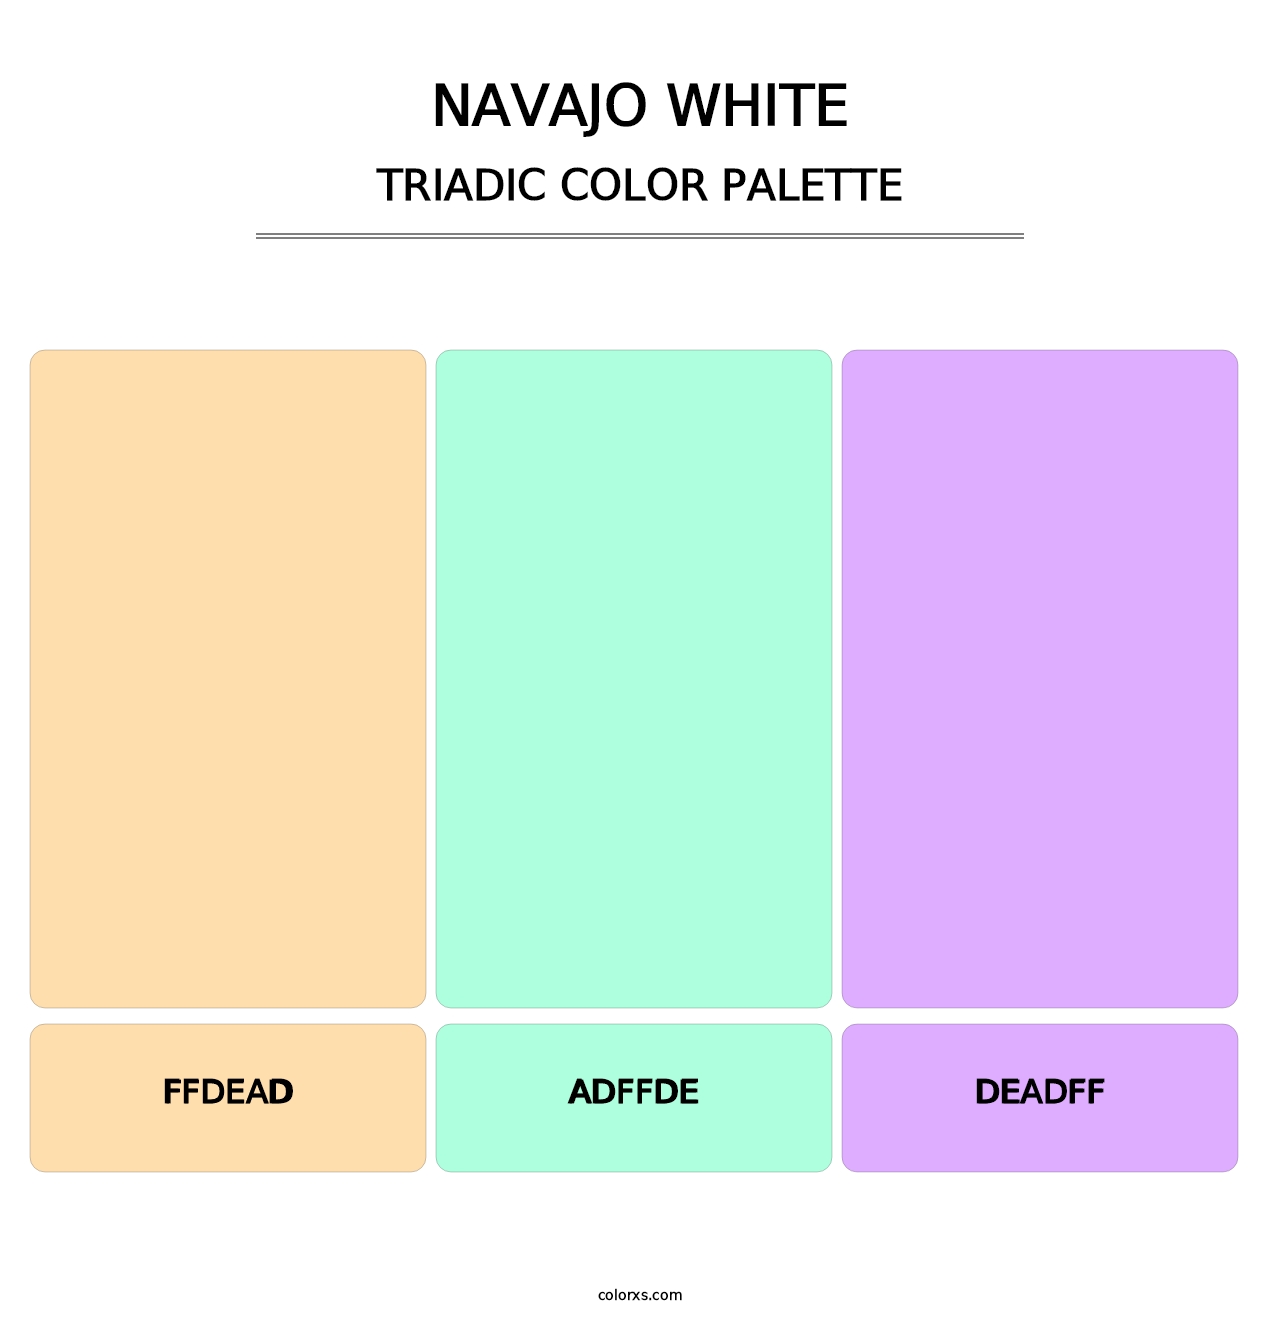 Navajo White - Triadic Color Palette